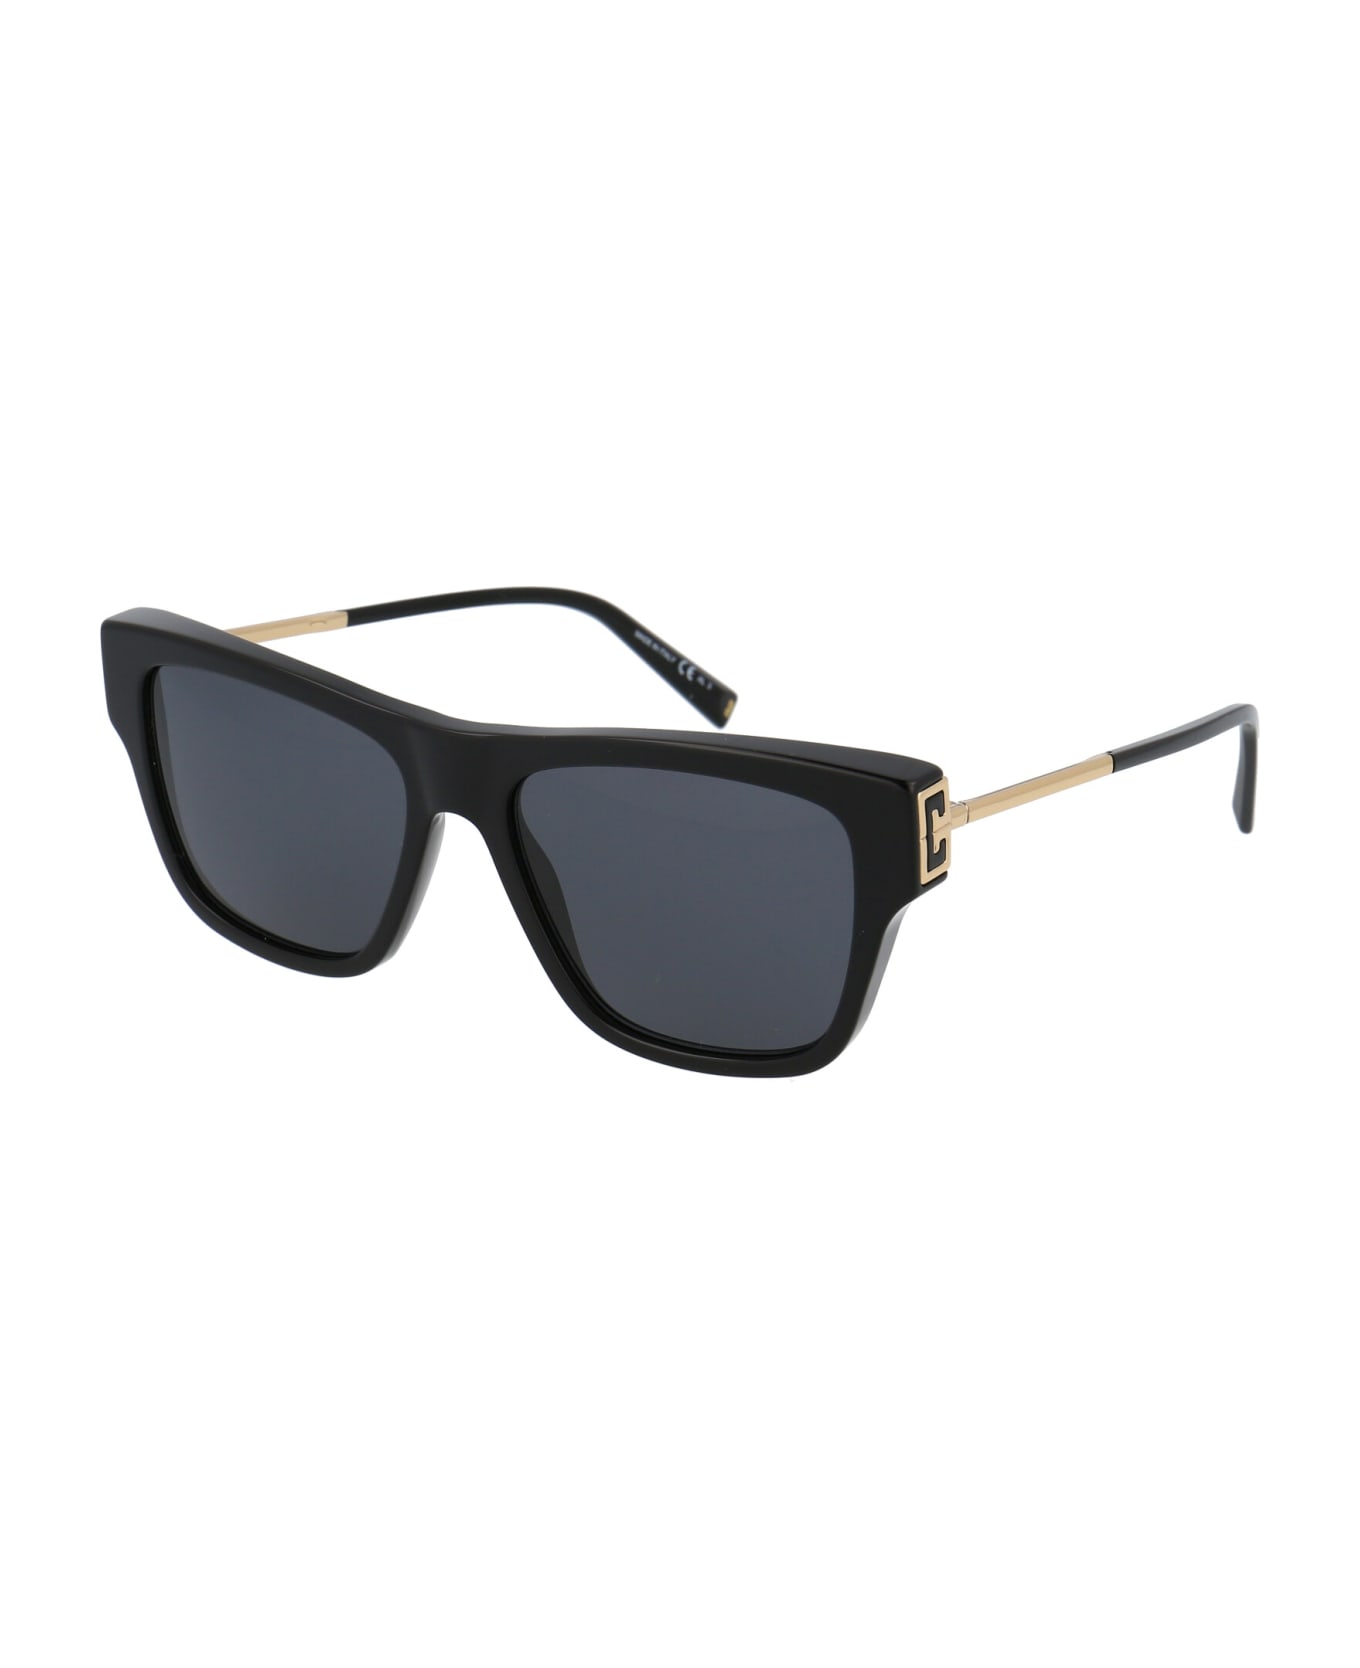 Givenchy Eyewear Gv 7190/s Sunglasses - 807IR BLACK サングラス